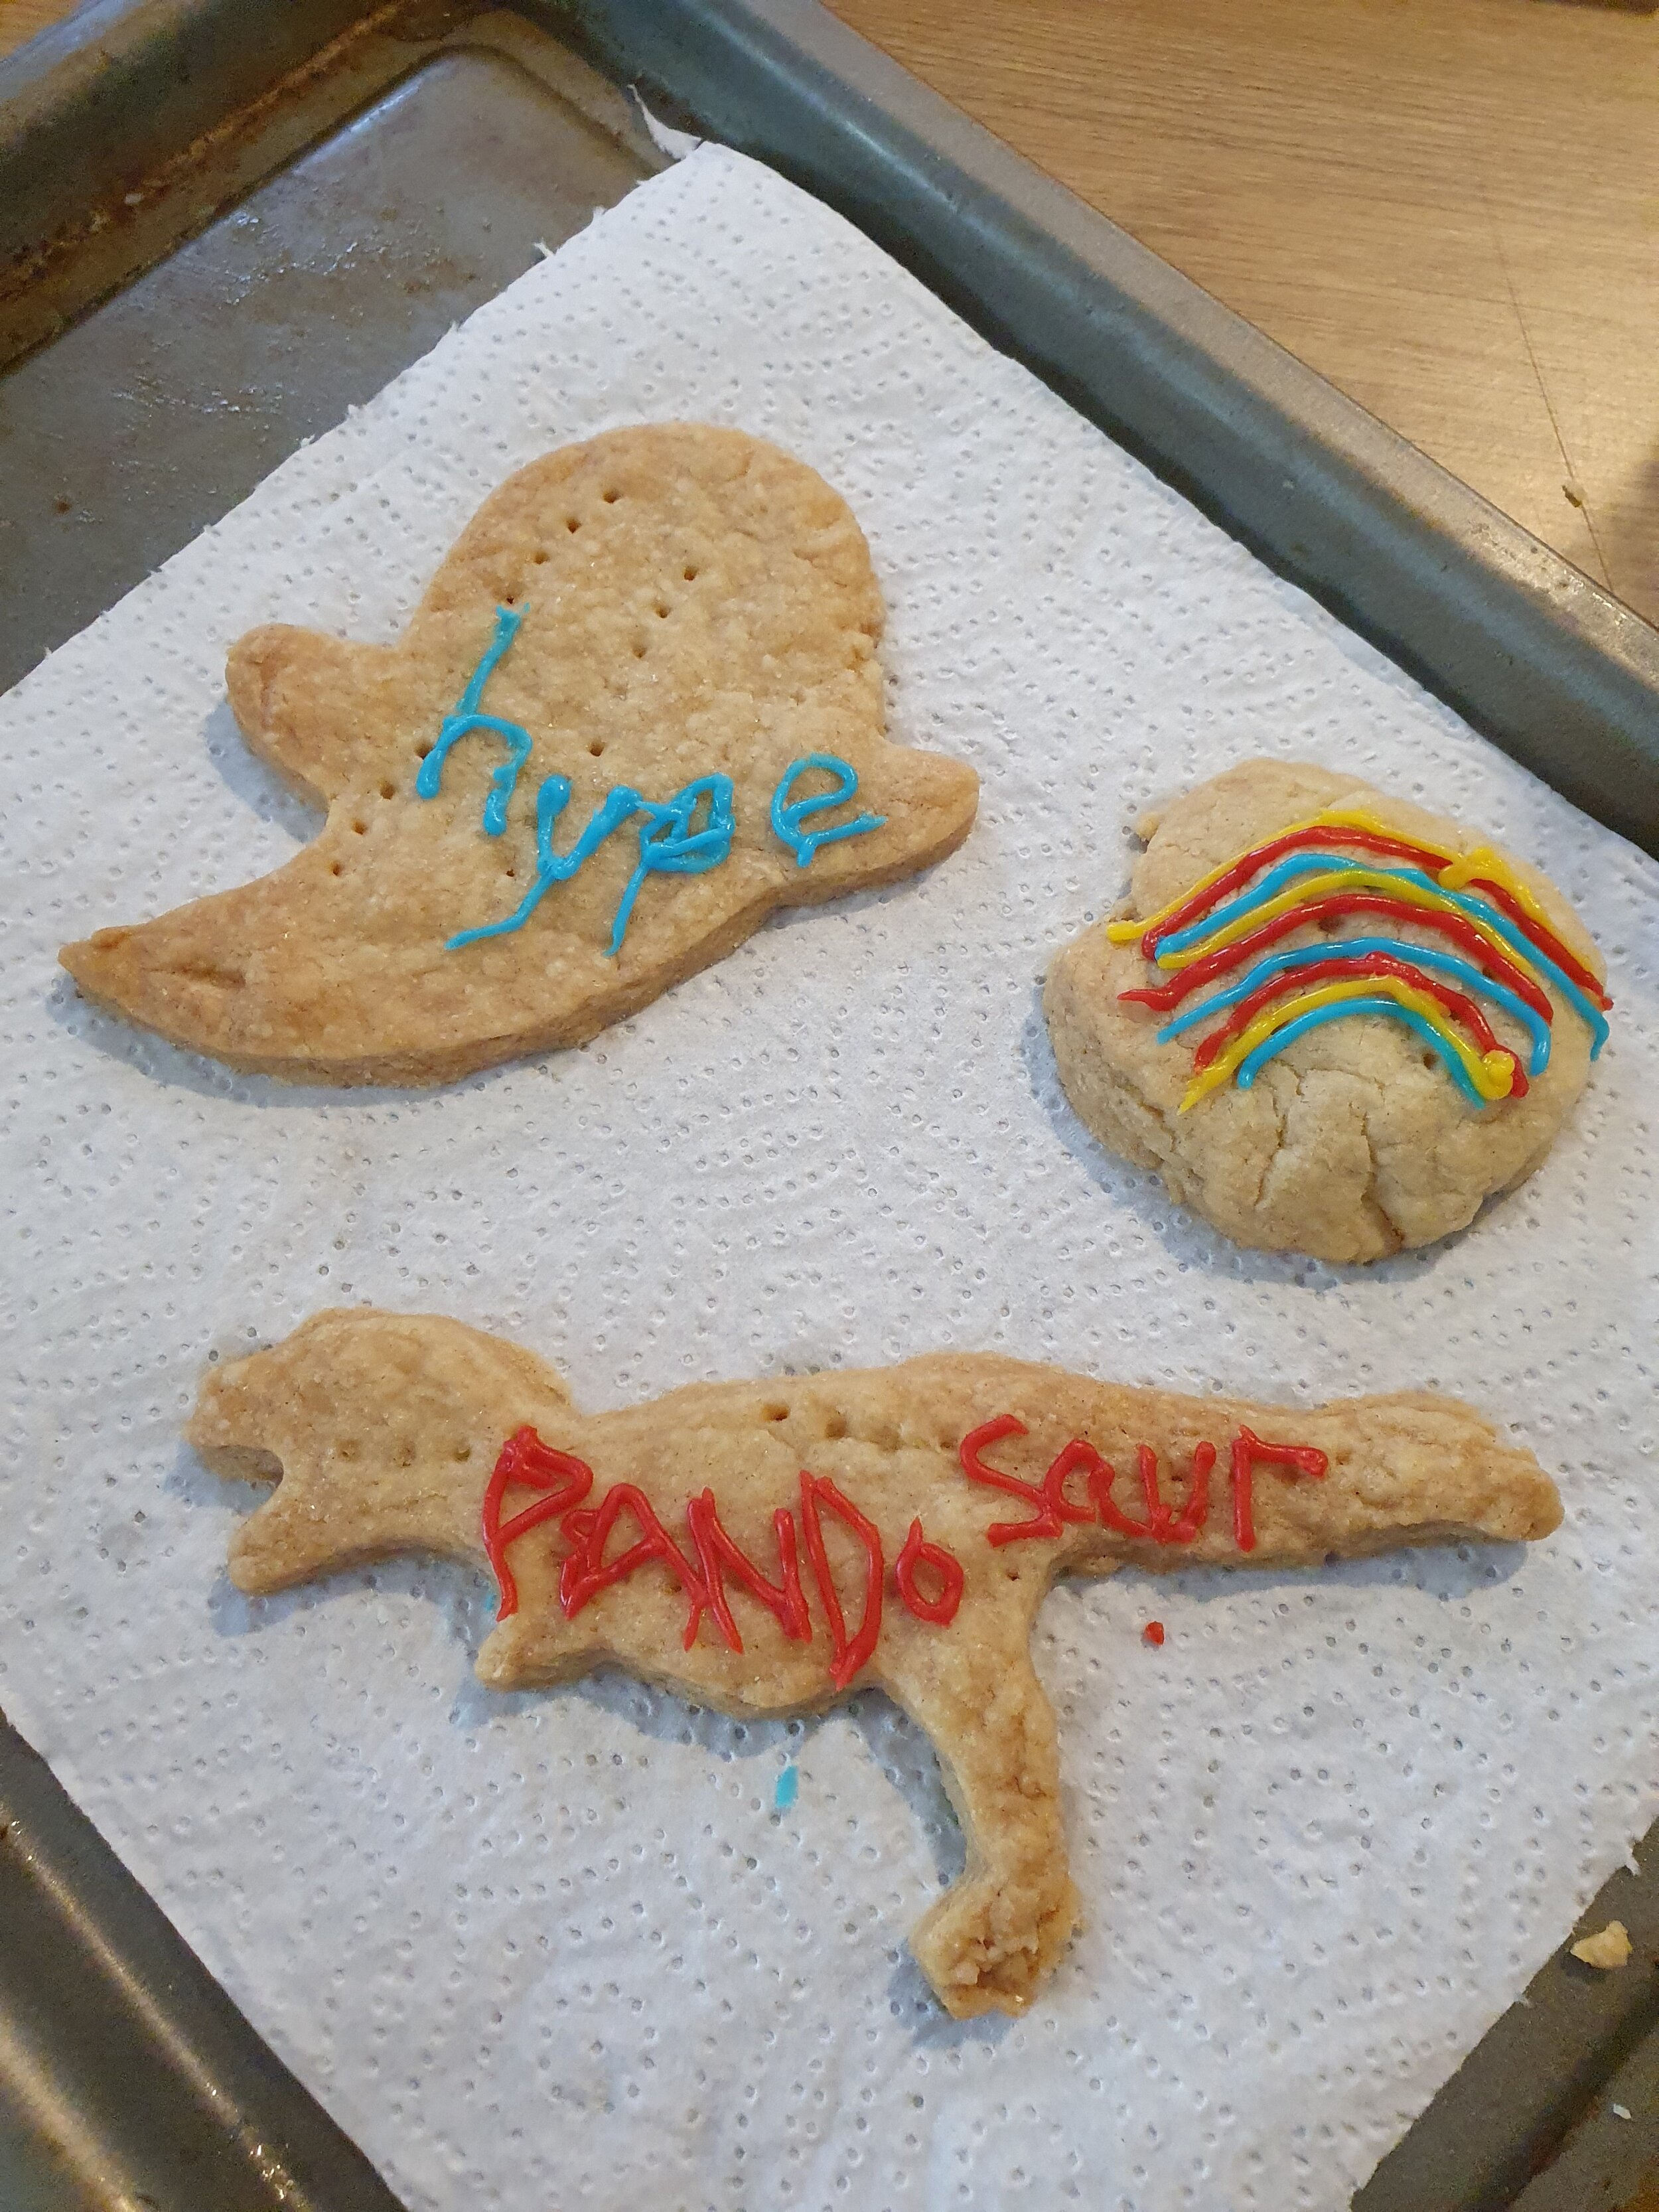 Rachel and Levi's Pandosaur biscuits